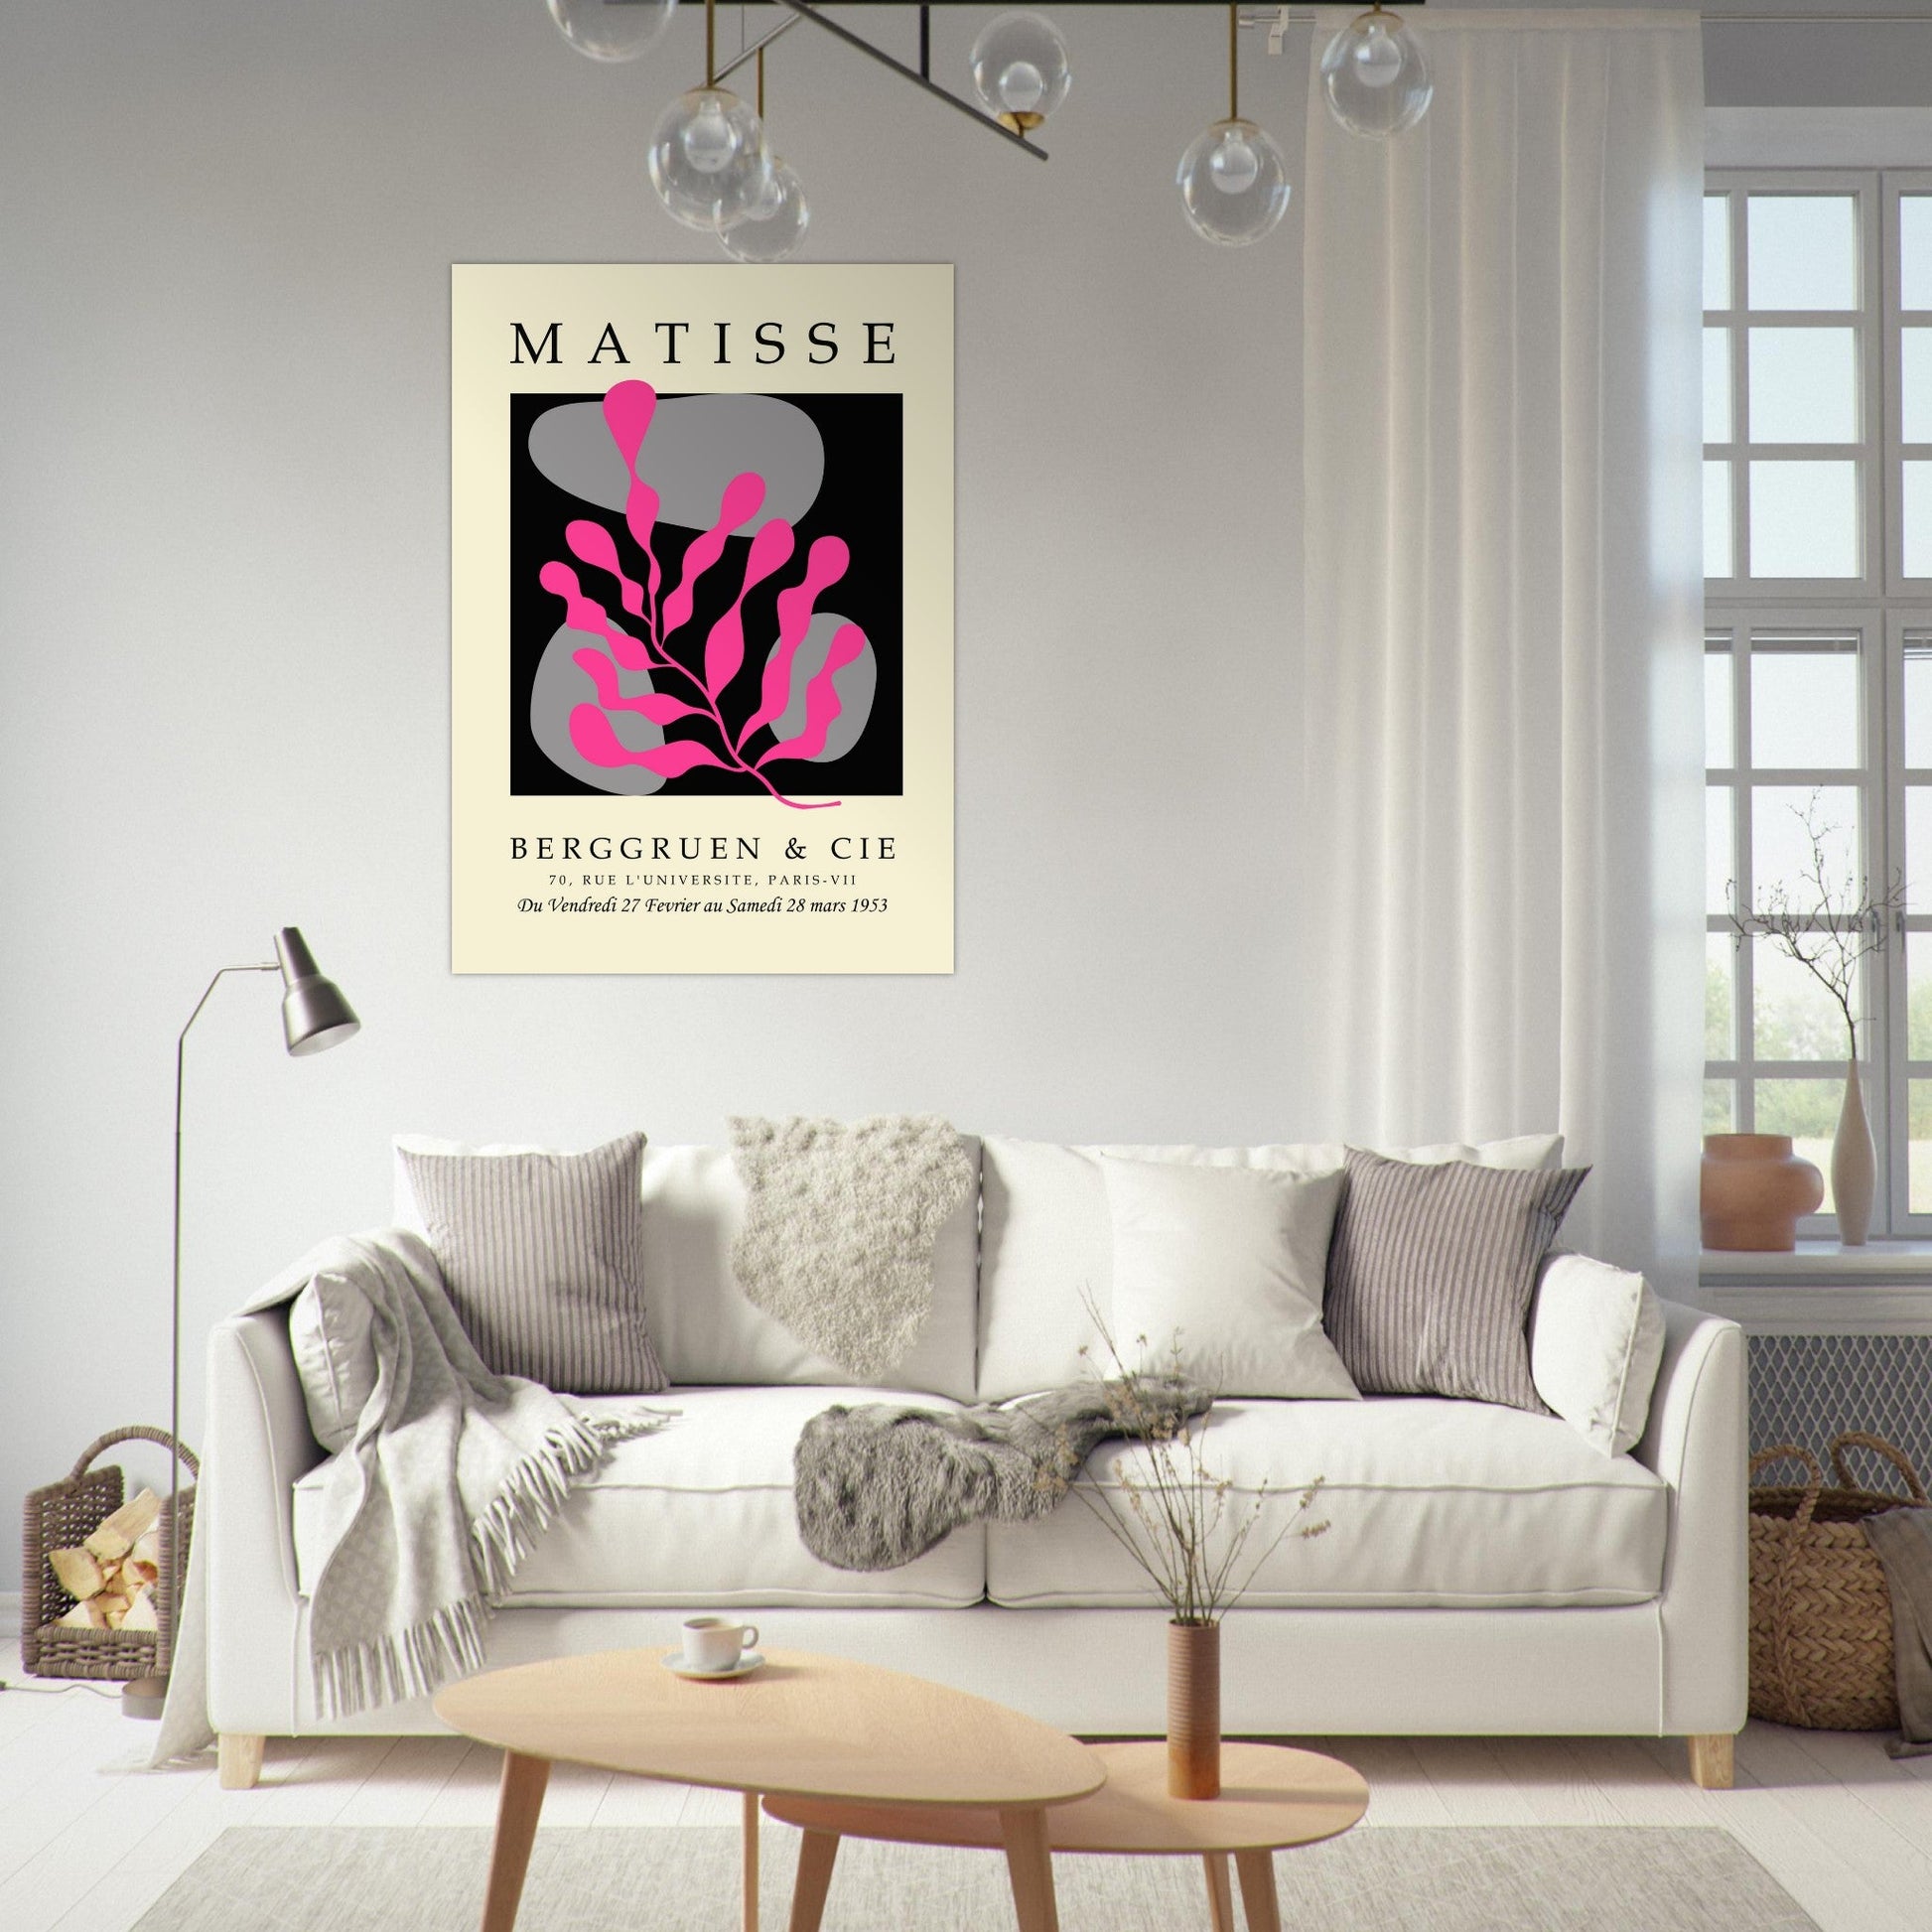 Matisse - Cut Outs, black, Henri Matisse Art Print, Matisse Exhibition, #illieeart